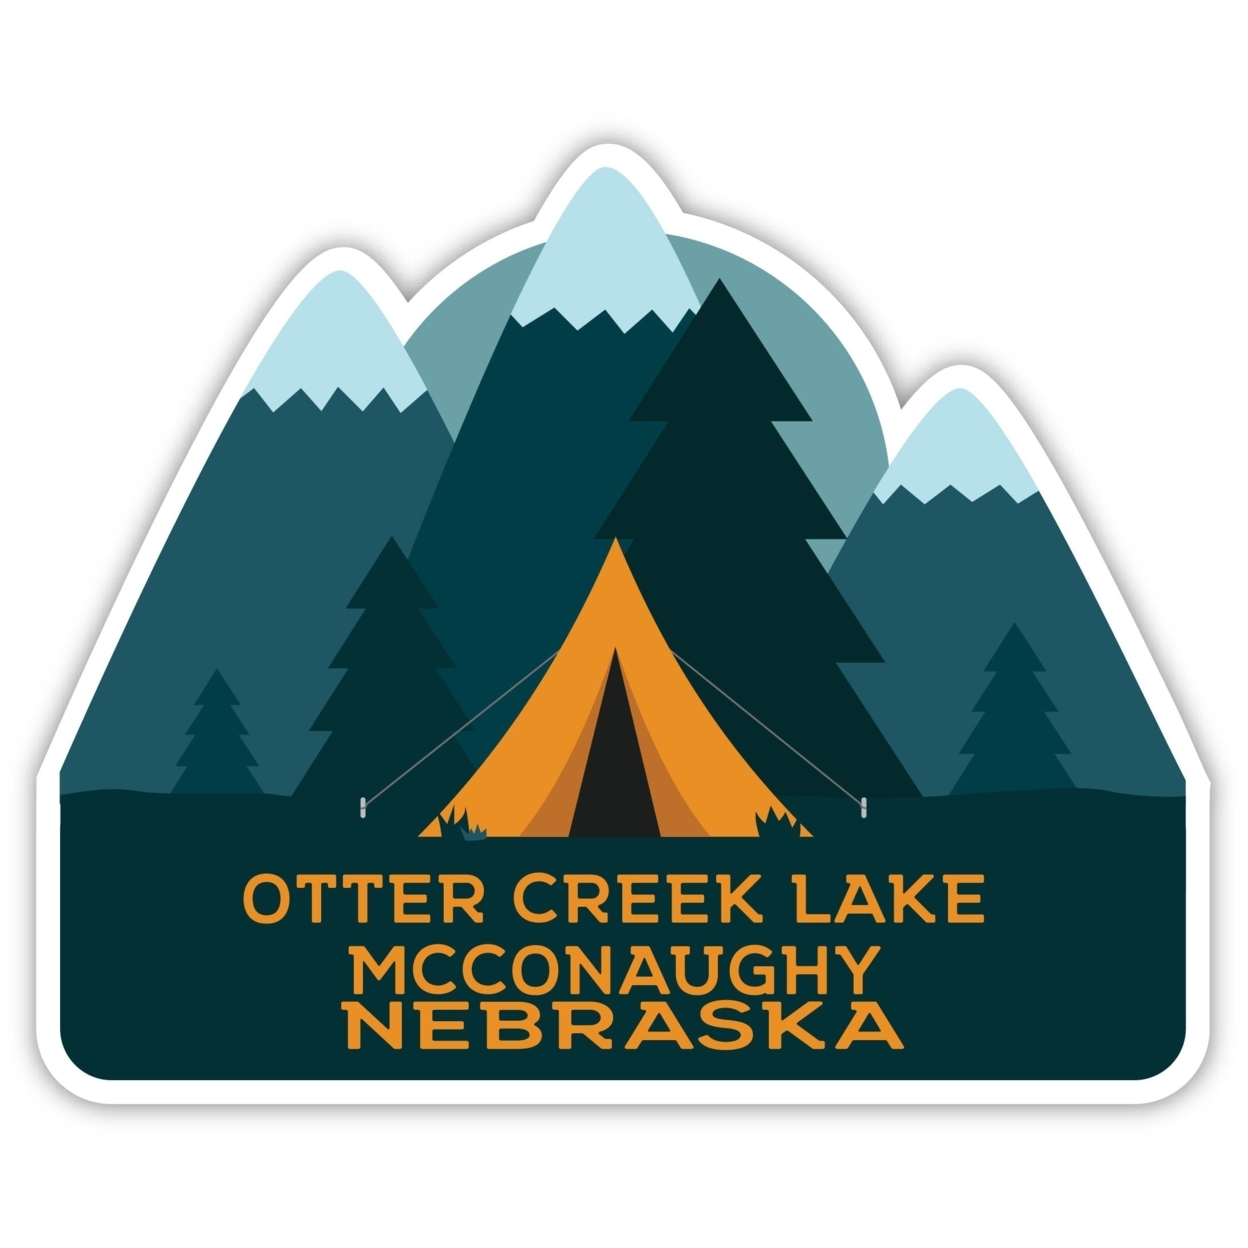 Otter Creek Lake Mcconaughy Nebraska Souvenir Decorative Stickers (Choose Theme And Size) - Single Unit, 4-Inch, Tent